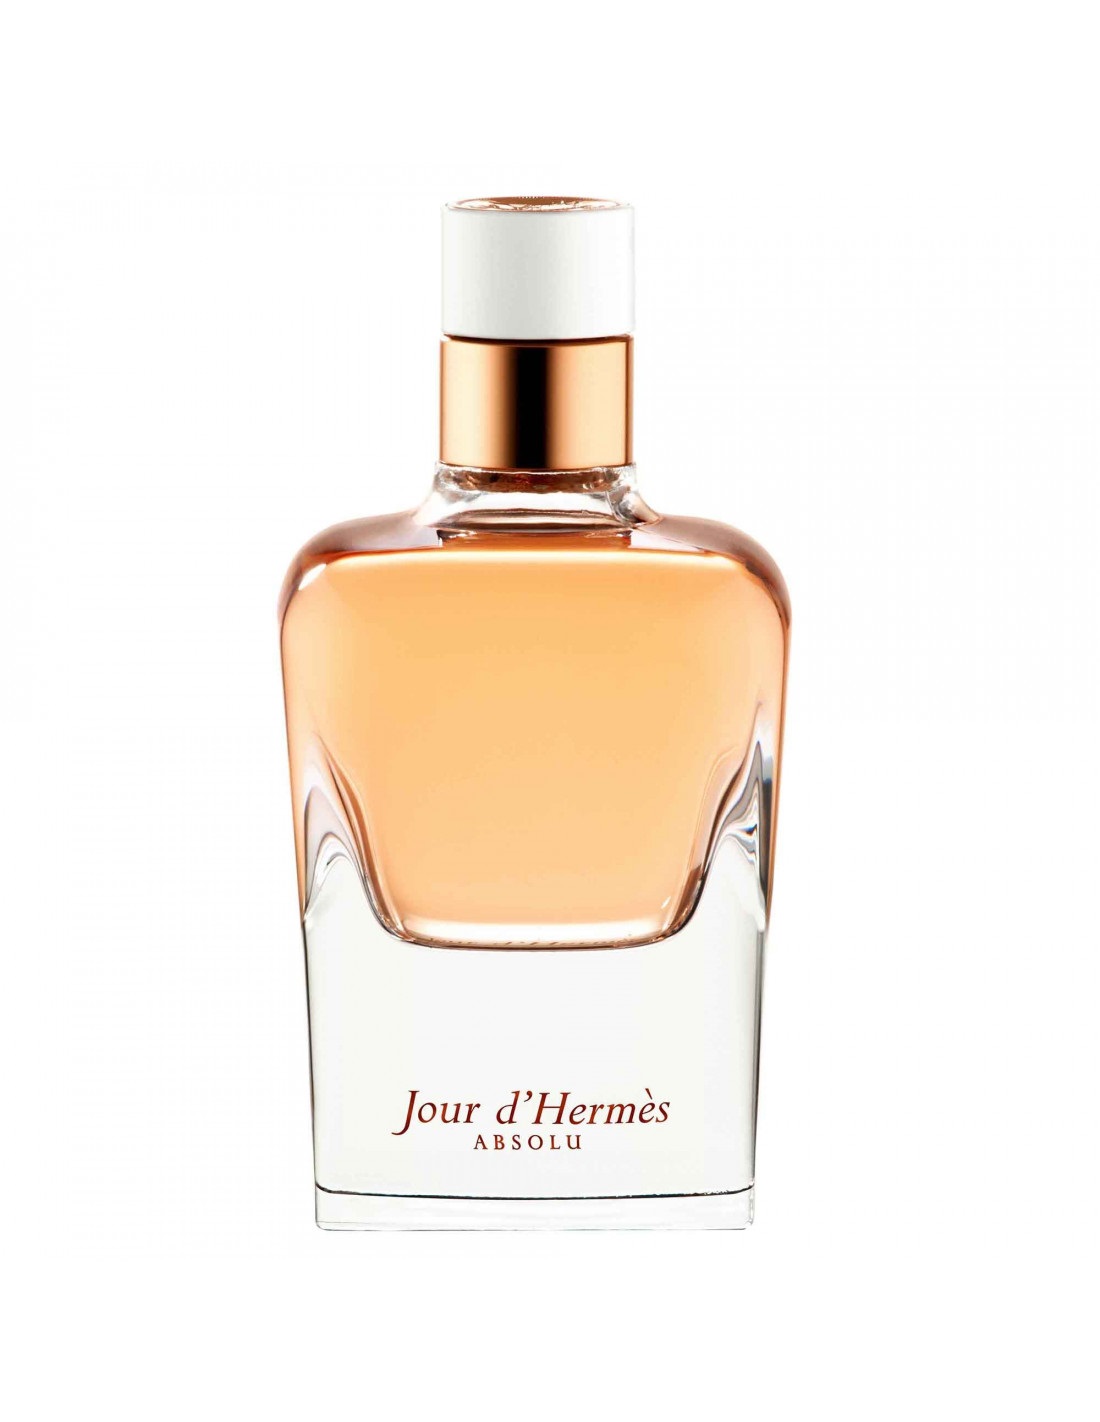 Cuidar gancho pellizco Hermes, Jour d´Hermes Absolu eau de parfum 50 ml vapo.